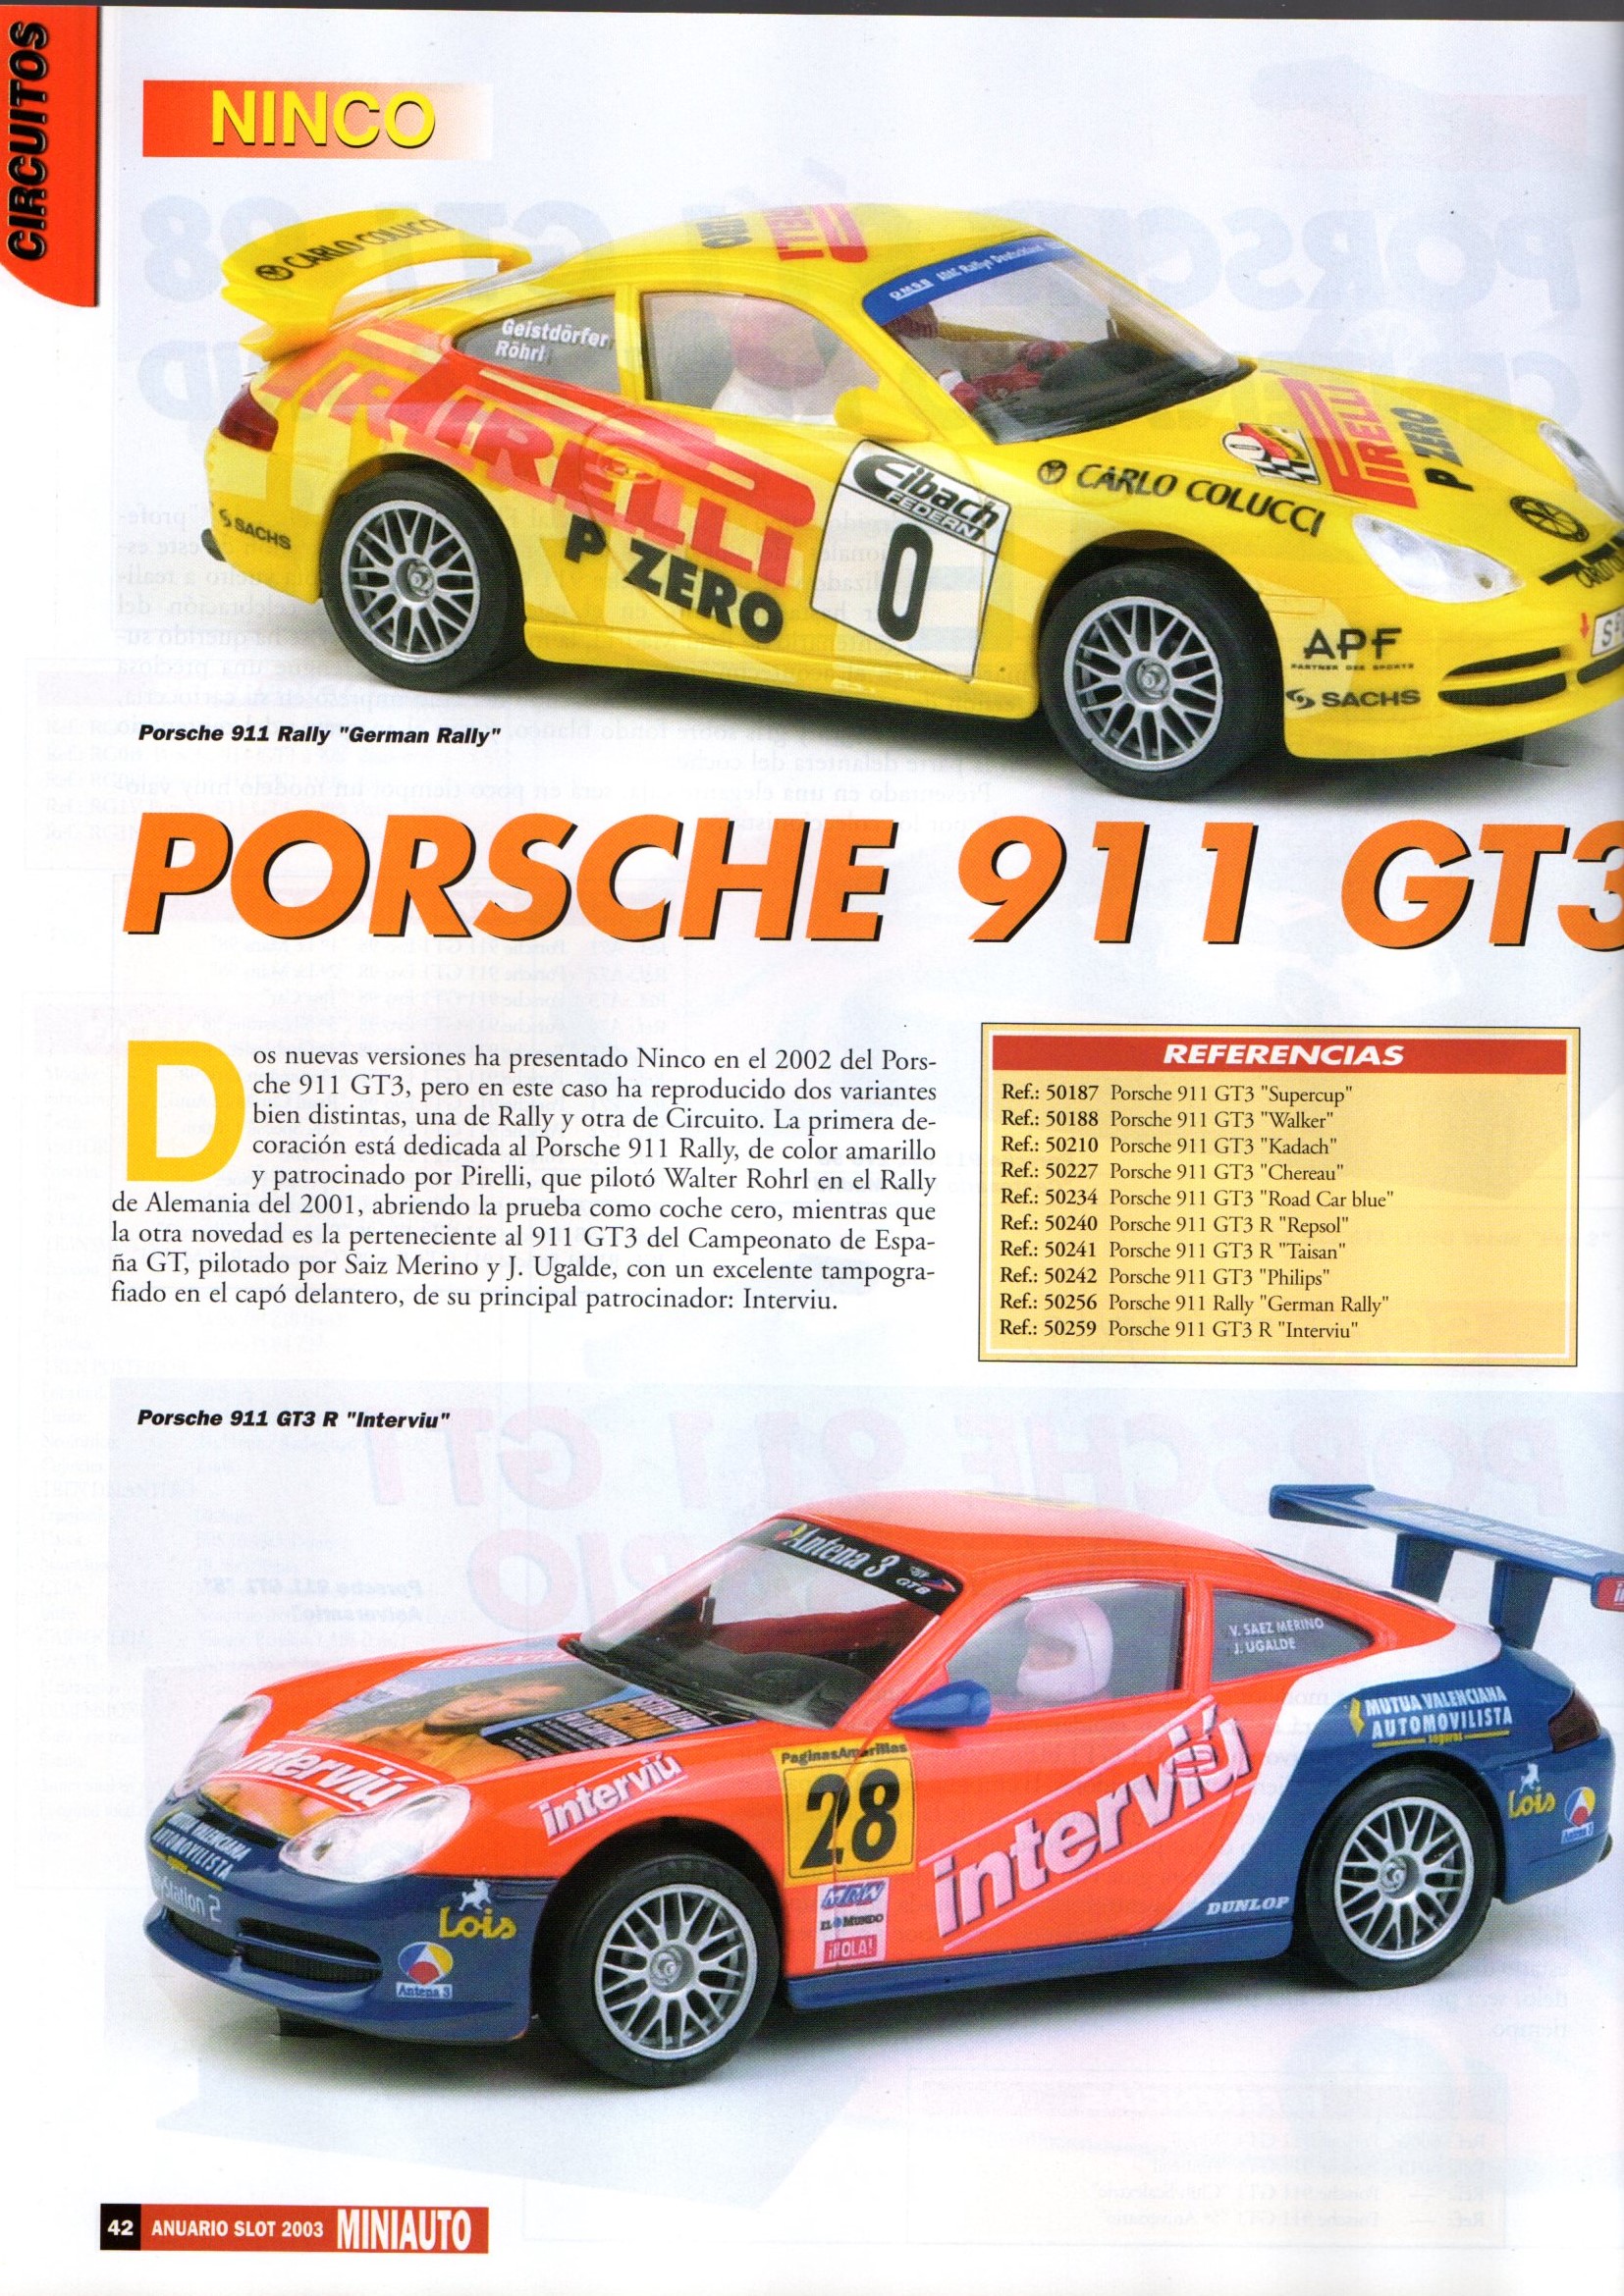 Porsche 911 GT3 R (50259